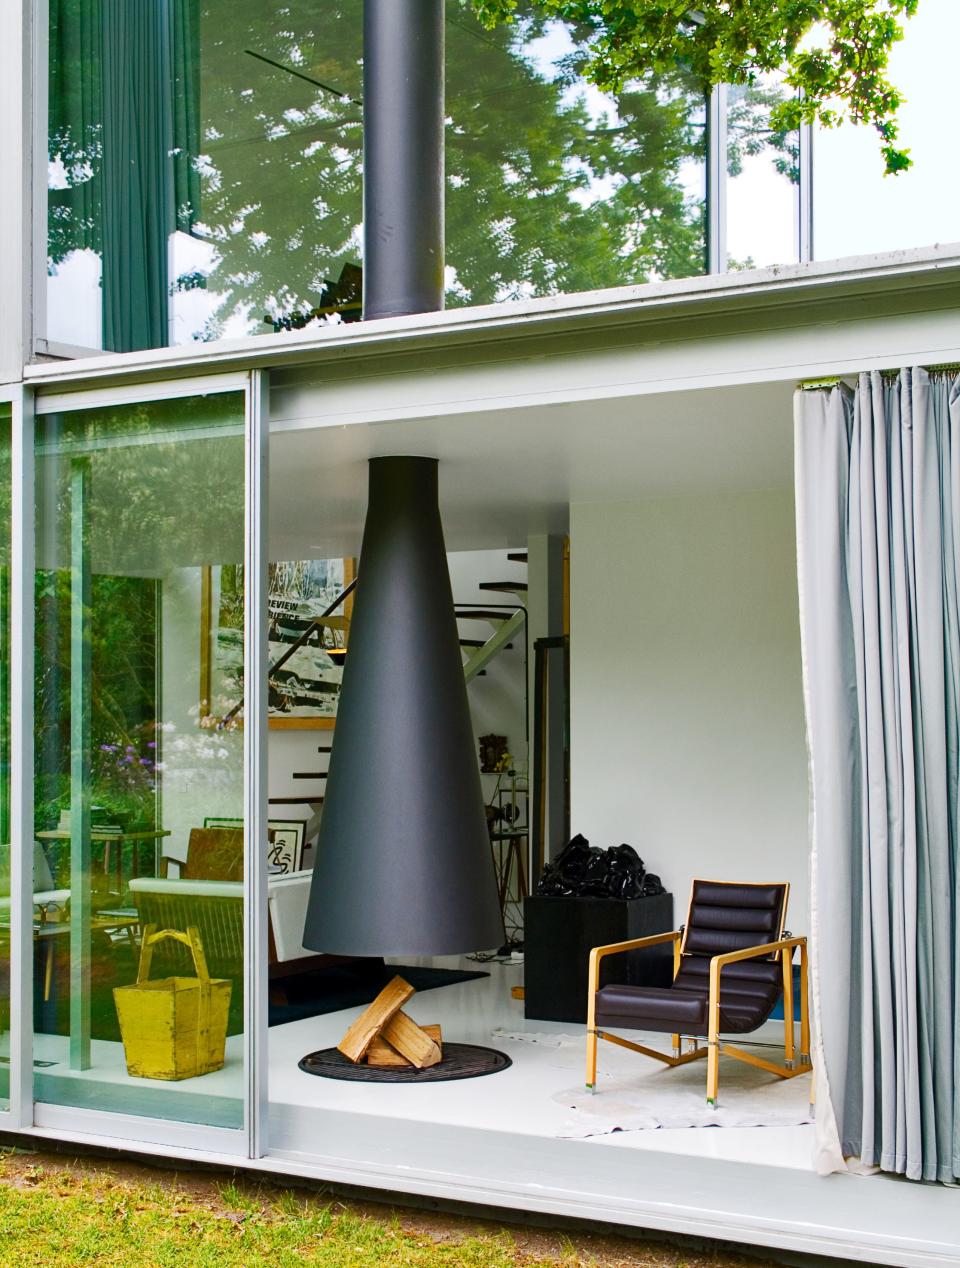 A Transat sits fireside in this Belgian pavilion, built by the architect Maarten Van Severen.